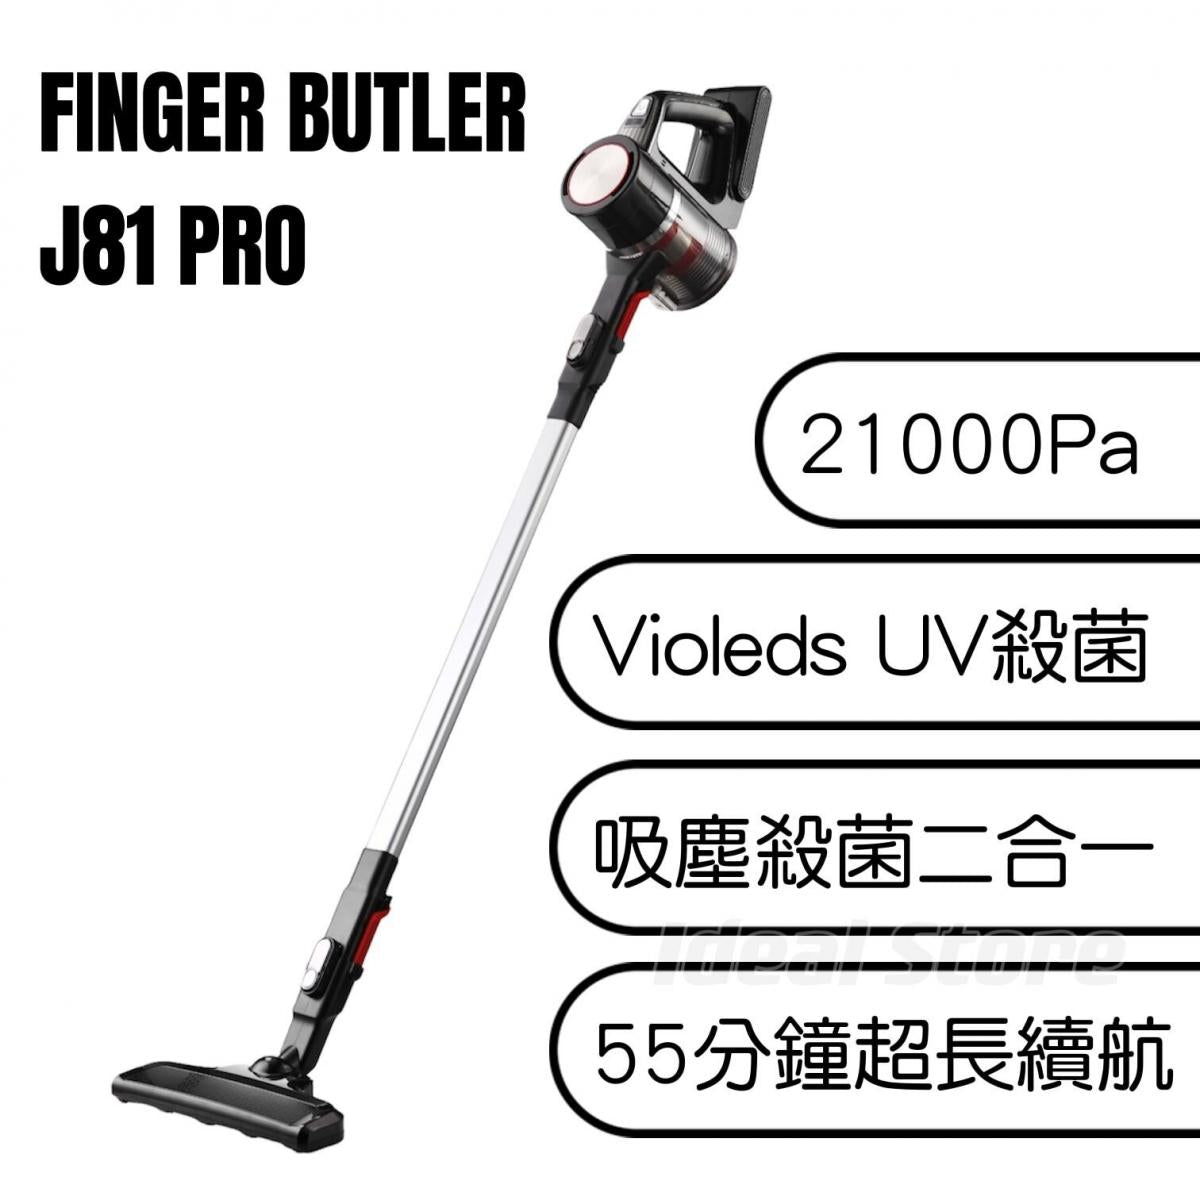 Finger Butler - J81 Pro 二合一無線殺菌吸塵機｜21000Pa｜手持式｜紫外線殺菌｜Violeds